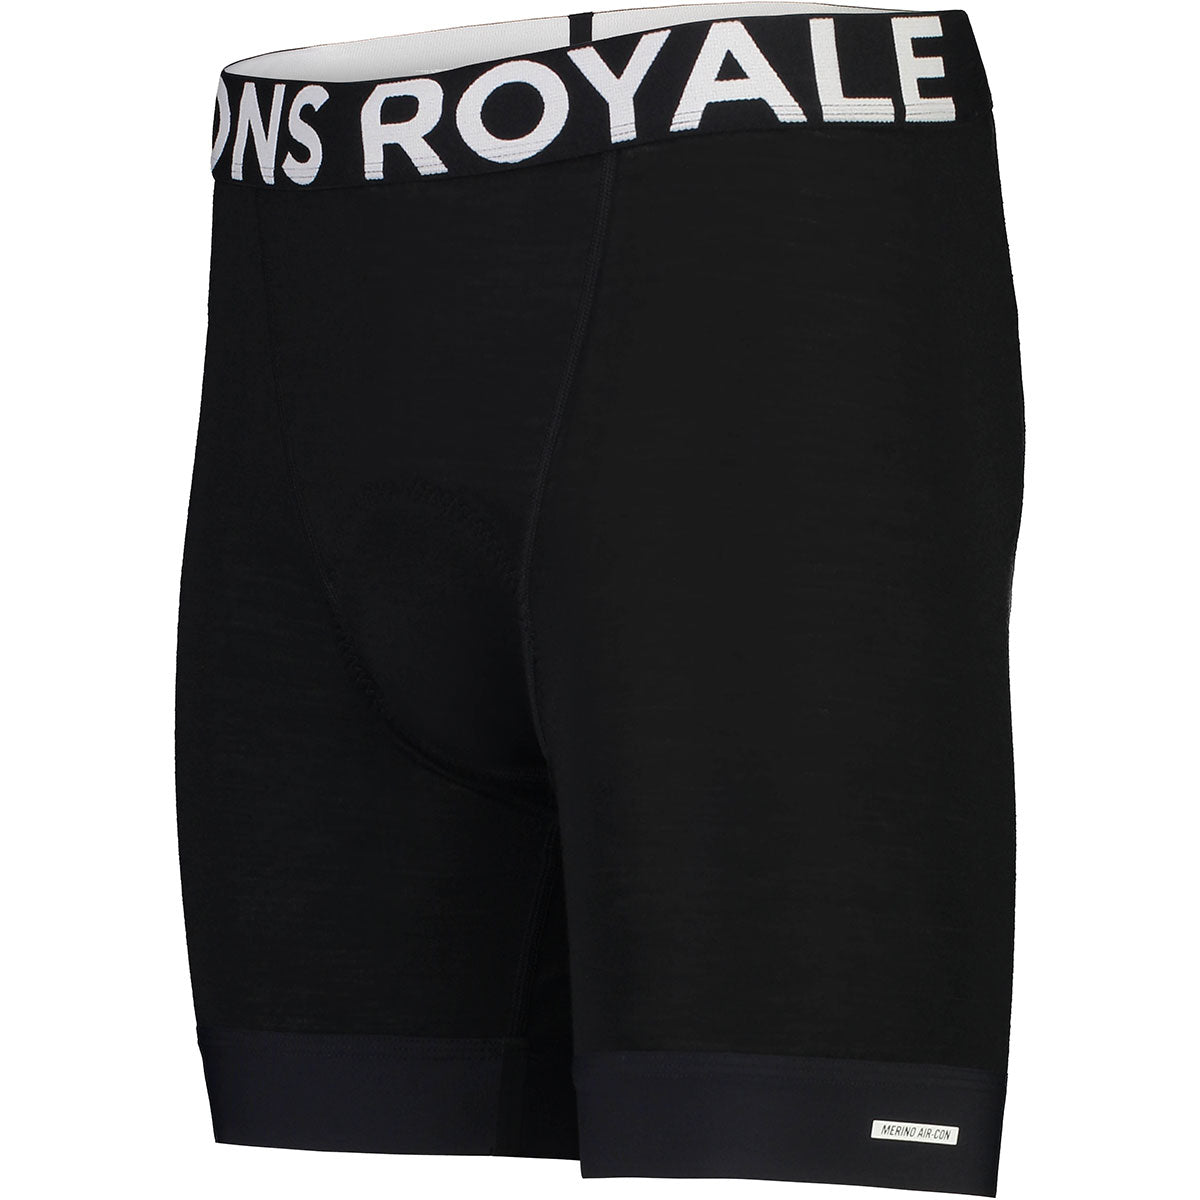 Mons Royale - Men's Enduro Bike Liner Shorts - Black